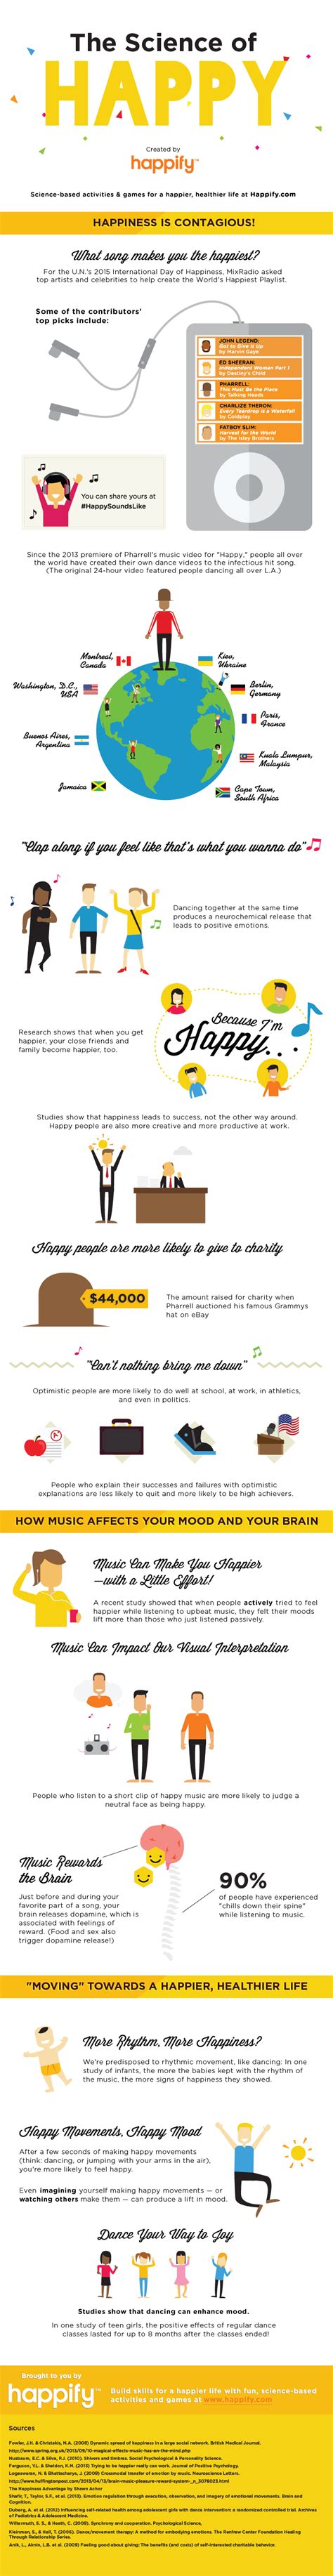 Happy Habits of Happy People | JobCluster.com Blog